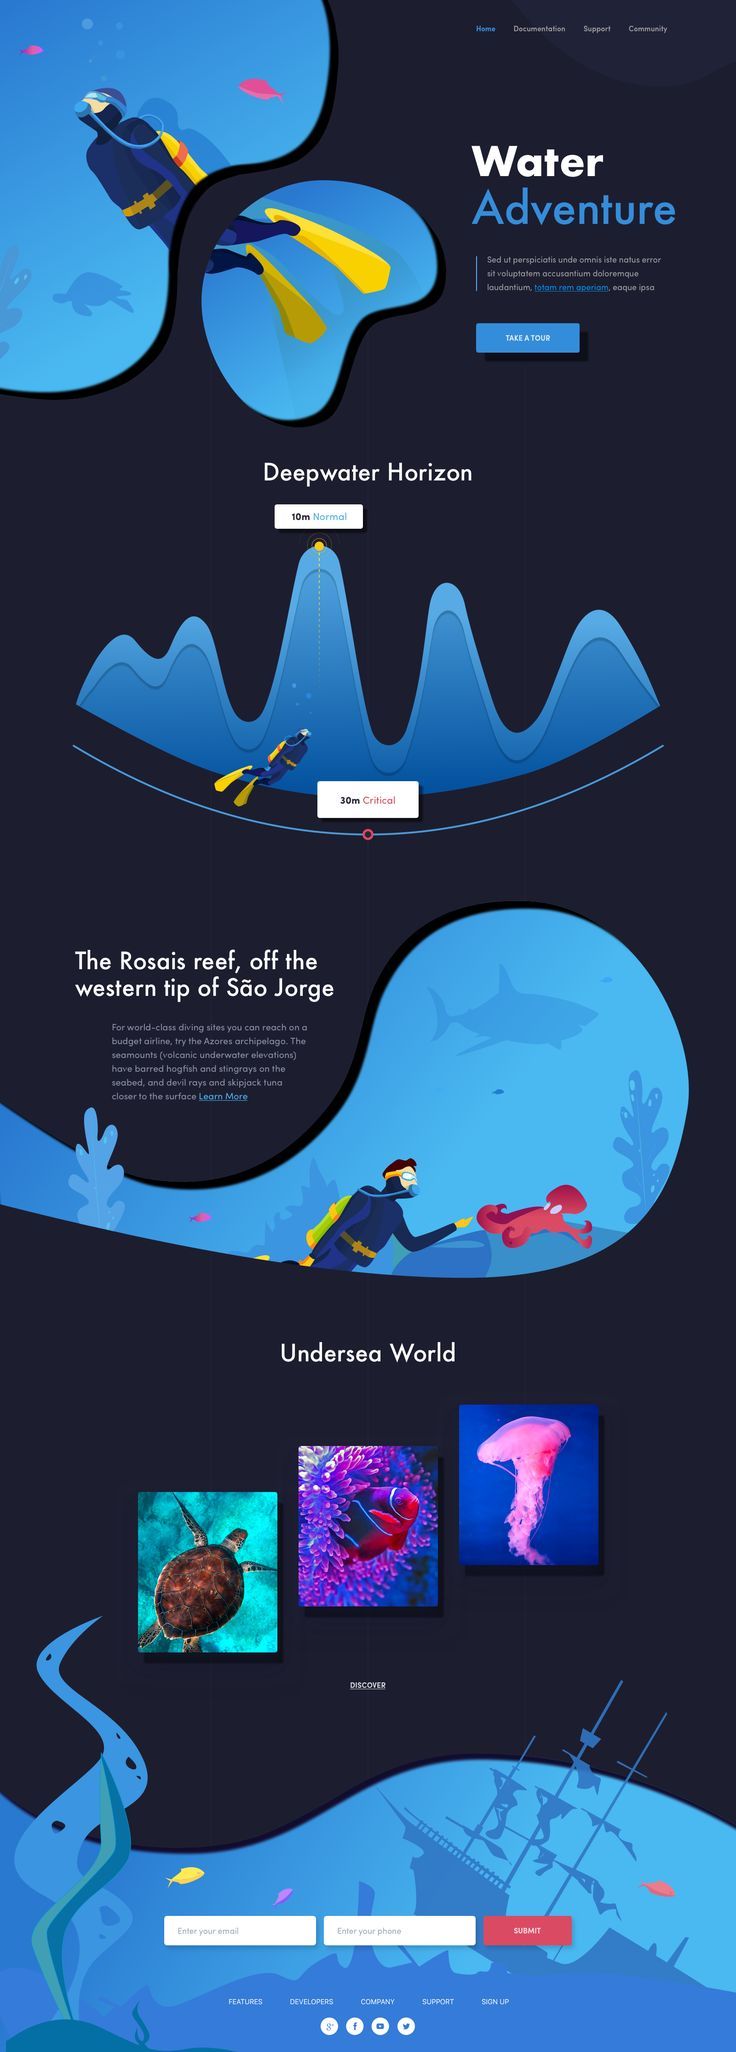 Web design for a water adventure service. #webdesign #underwater #wateradventure